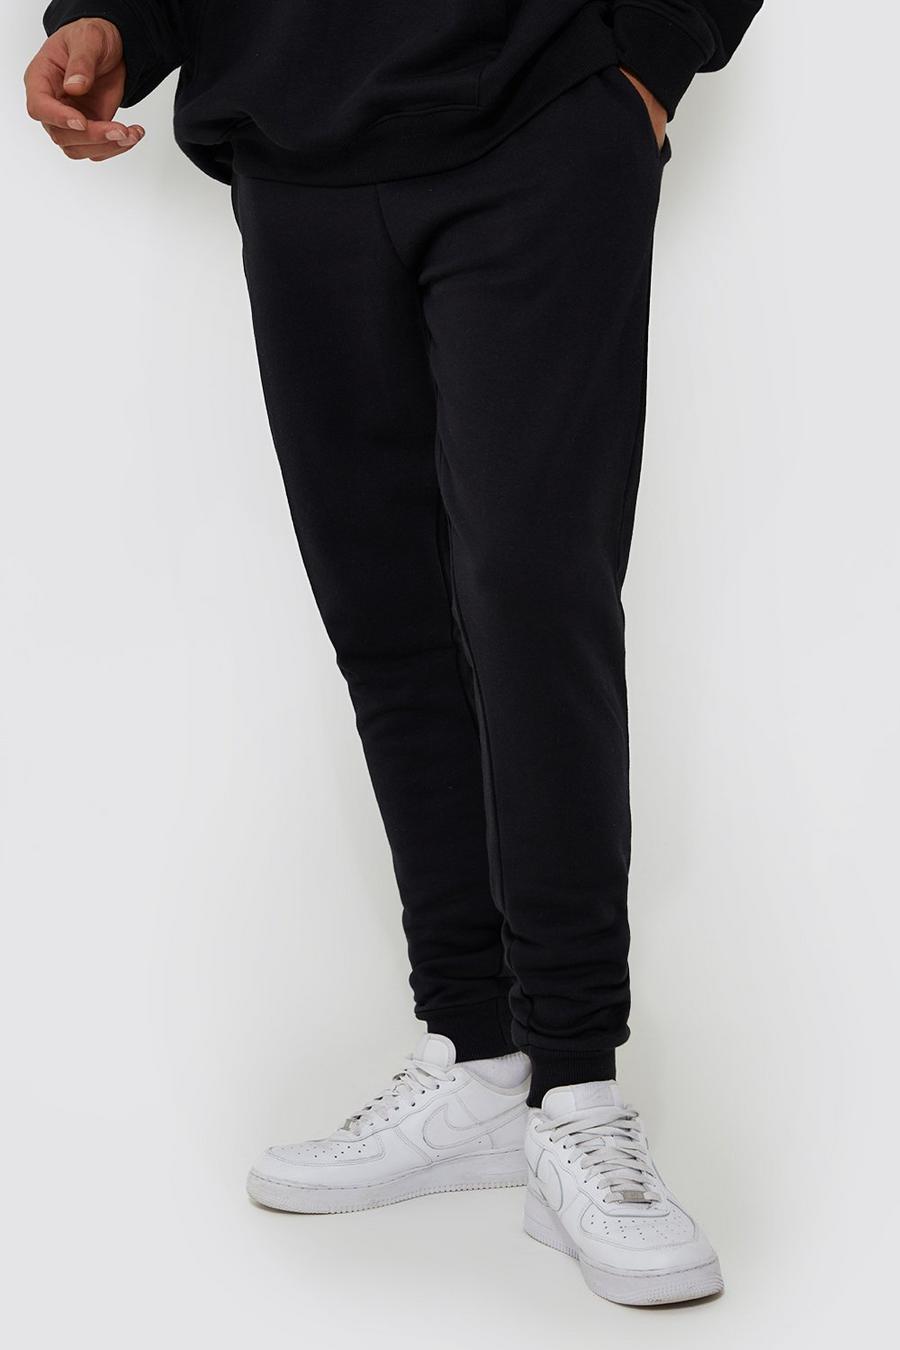 Tall Basic Skinny Jogginghose aus REEL Baumwolle, Black schwarz